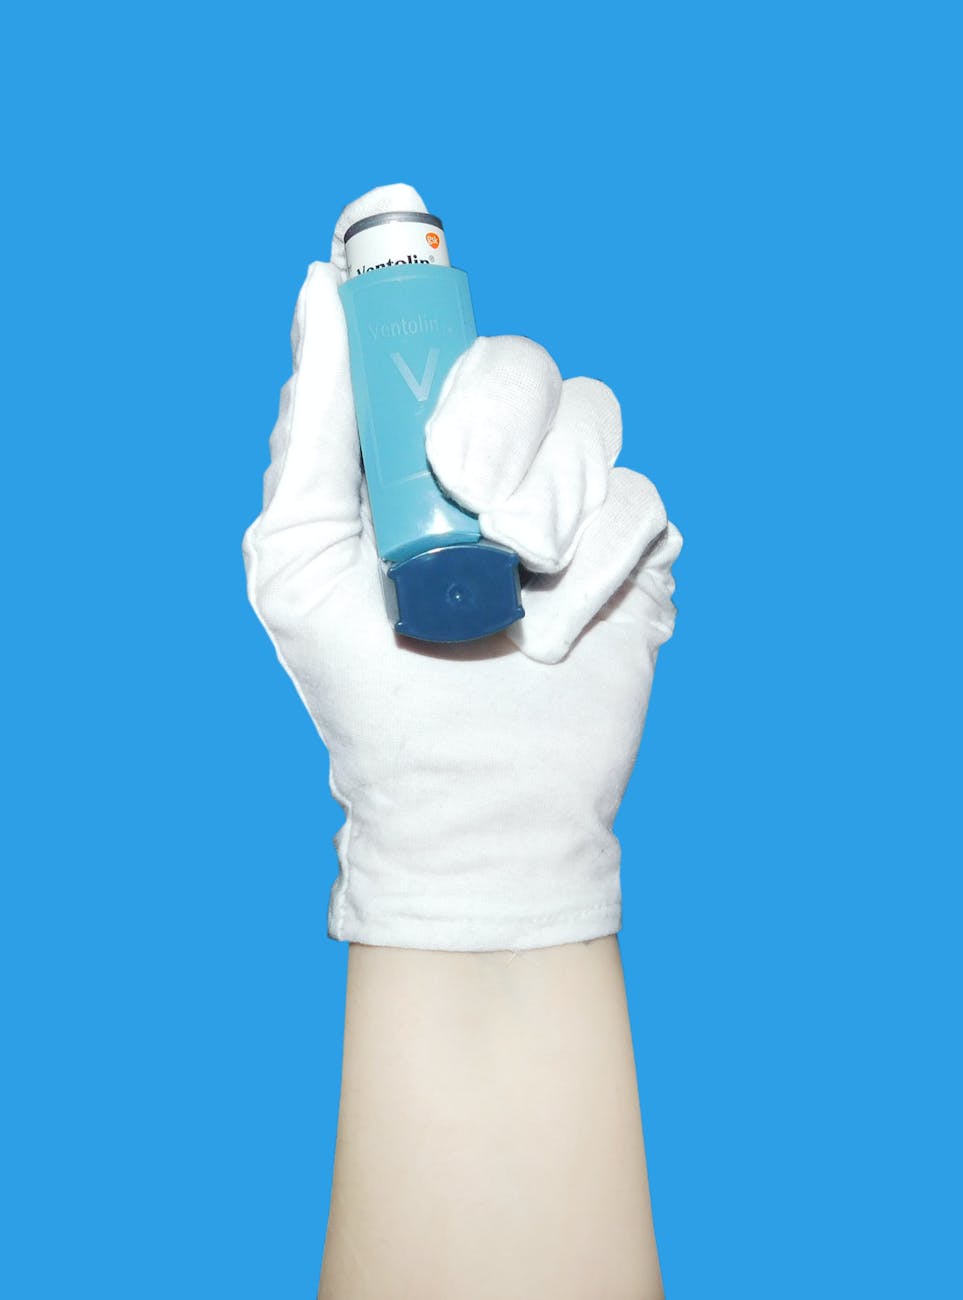 a hand wearing white gloves holding an inhaler